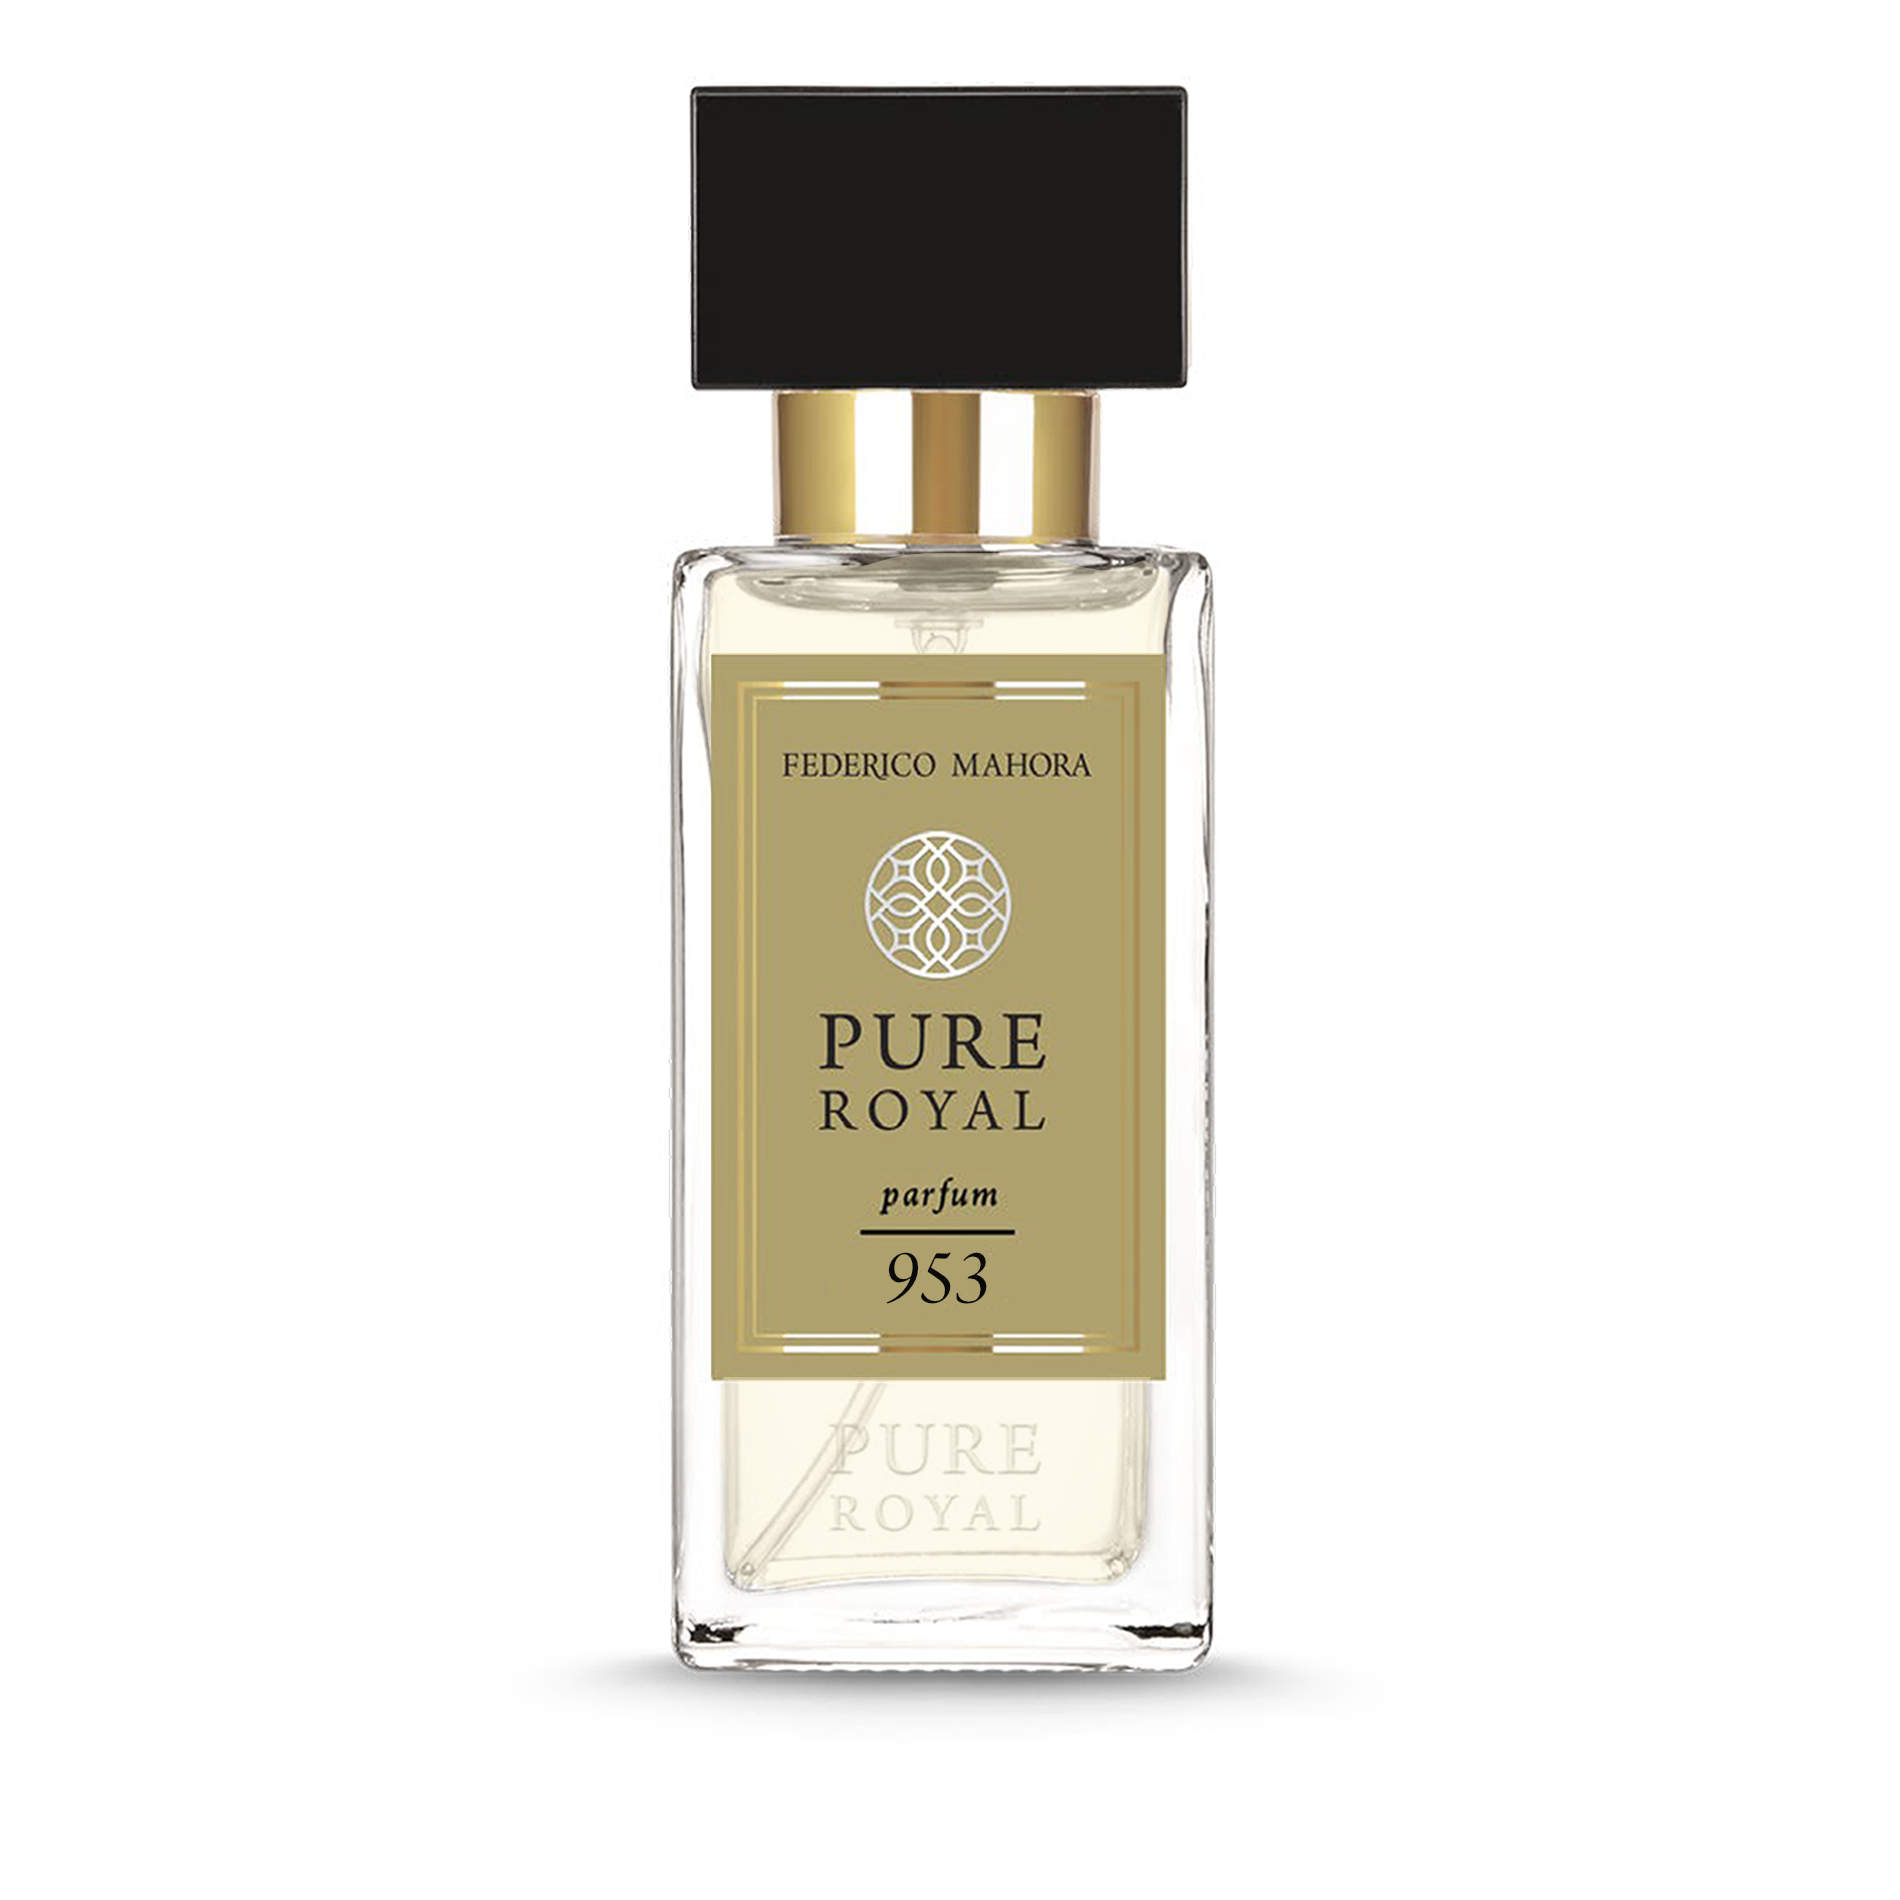 PURE ROYAL 953 Parfum Federico Mahora